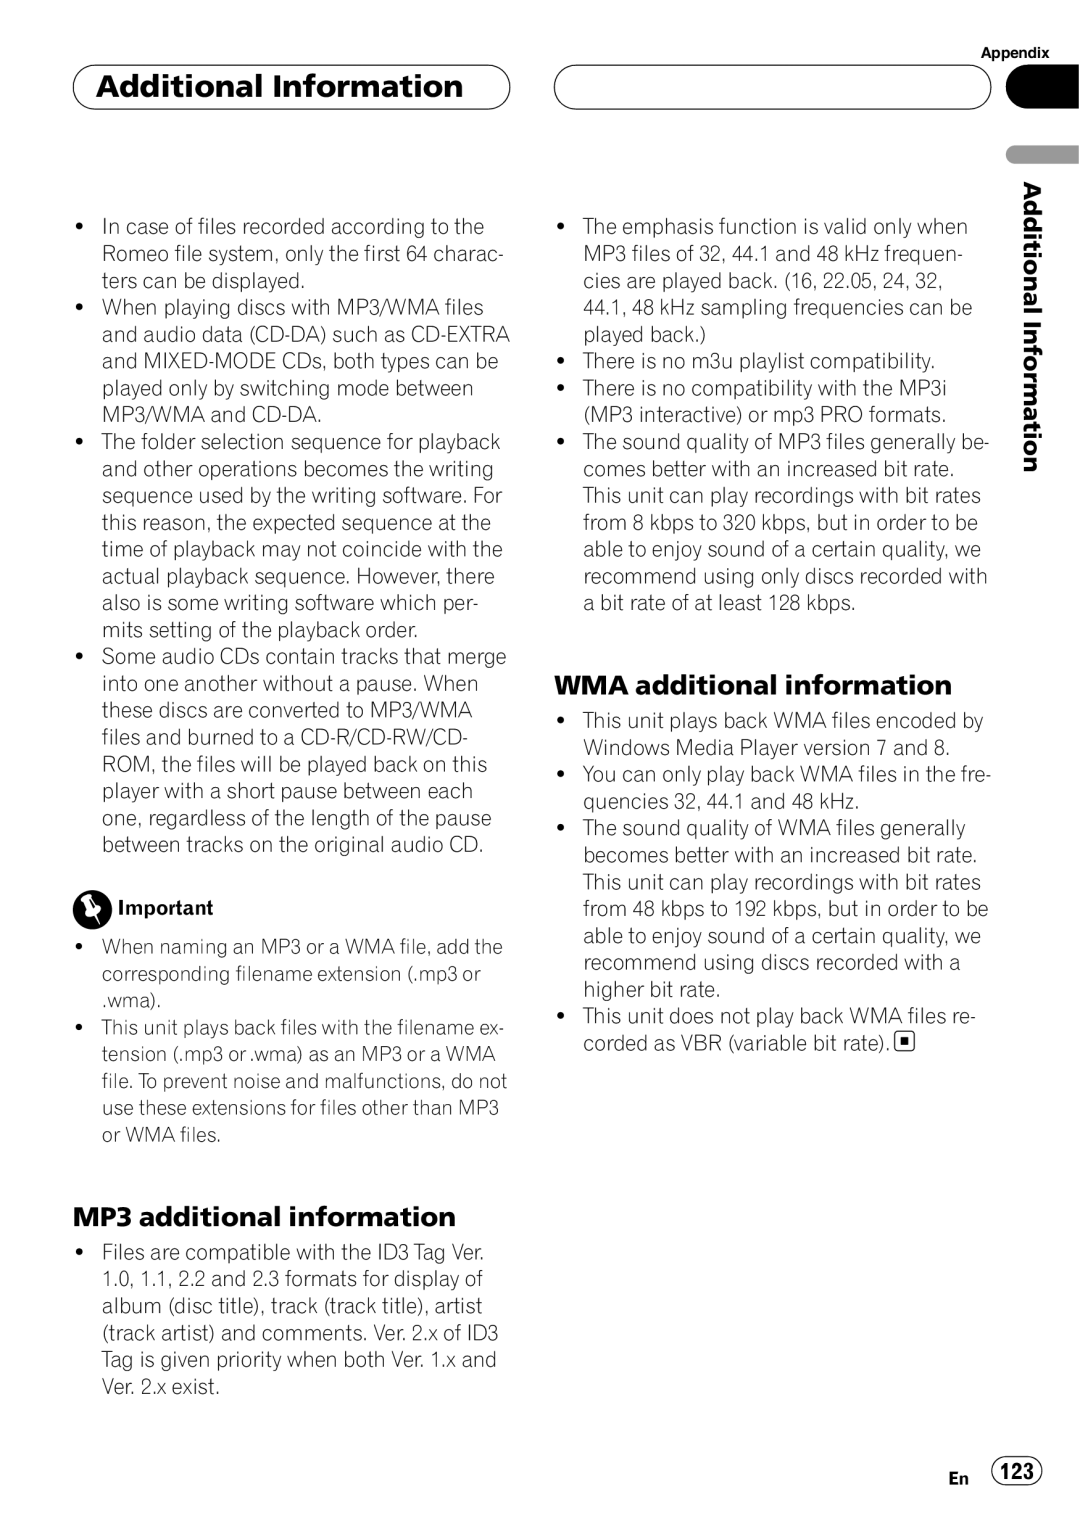 Pioneer AVH-P6800DVD operation manual MP3 additional information, WMA additional information, Additional Information 